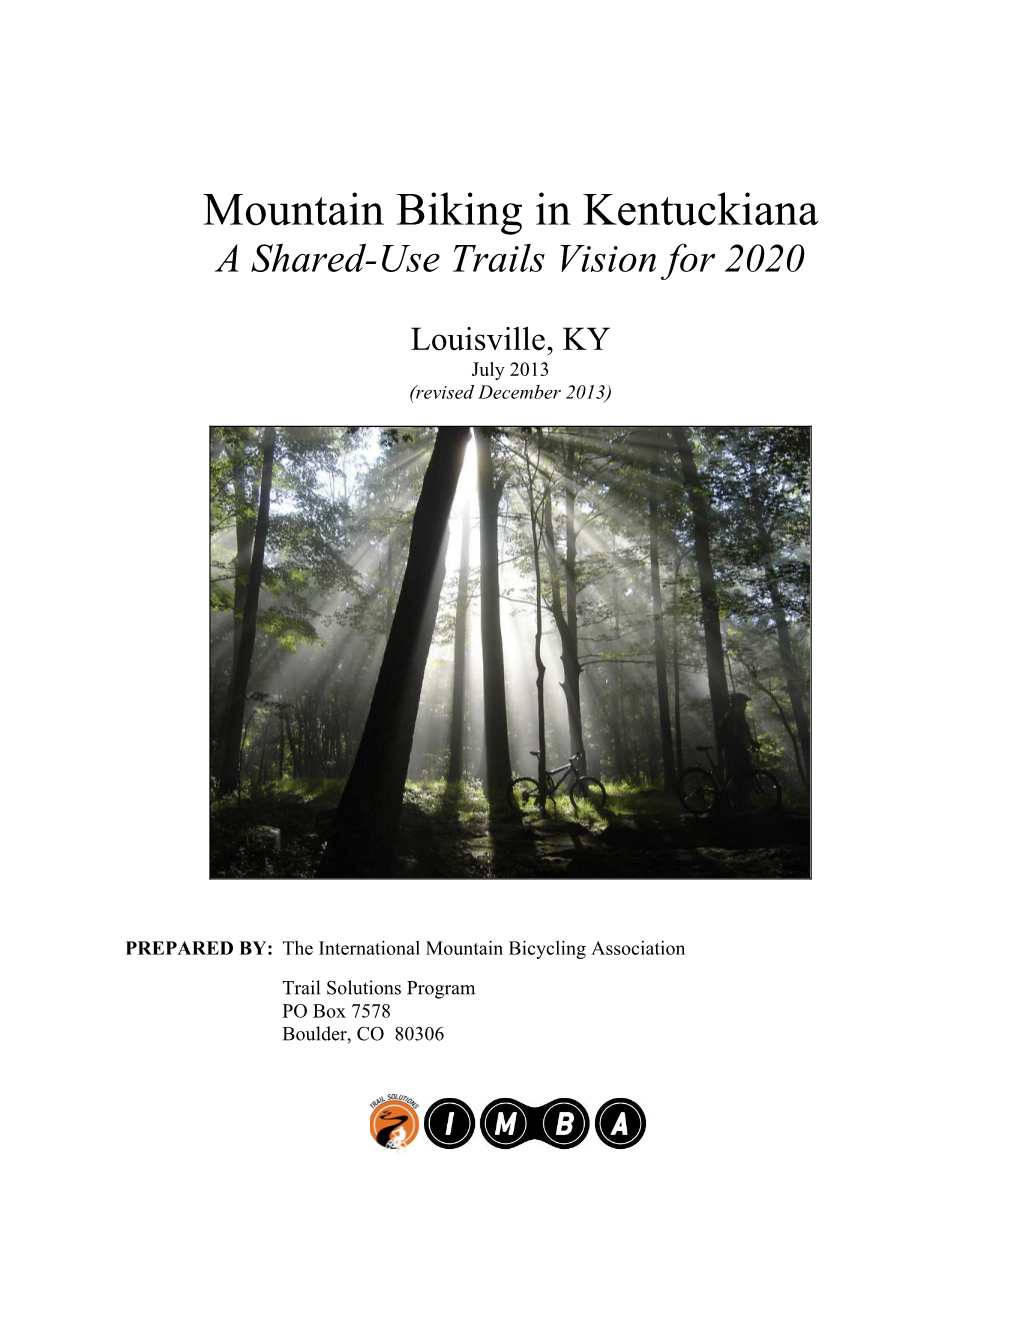 Mountain Biking in Kentuckiana a Shared-Use Trails Vision for 2020